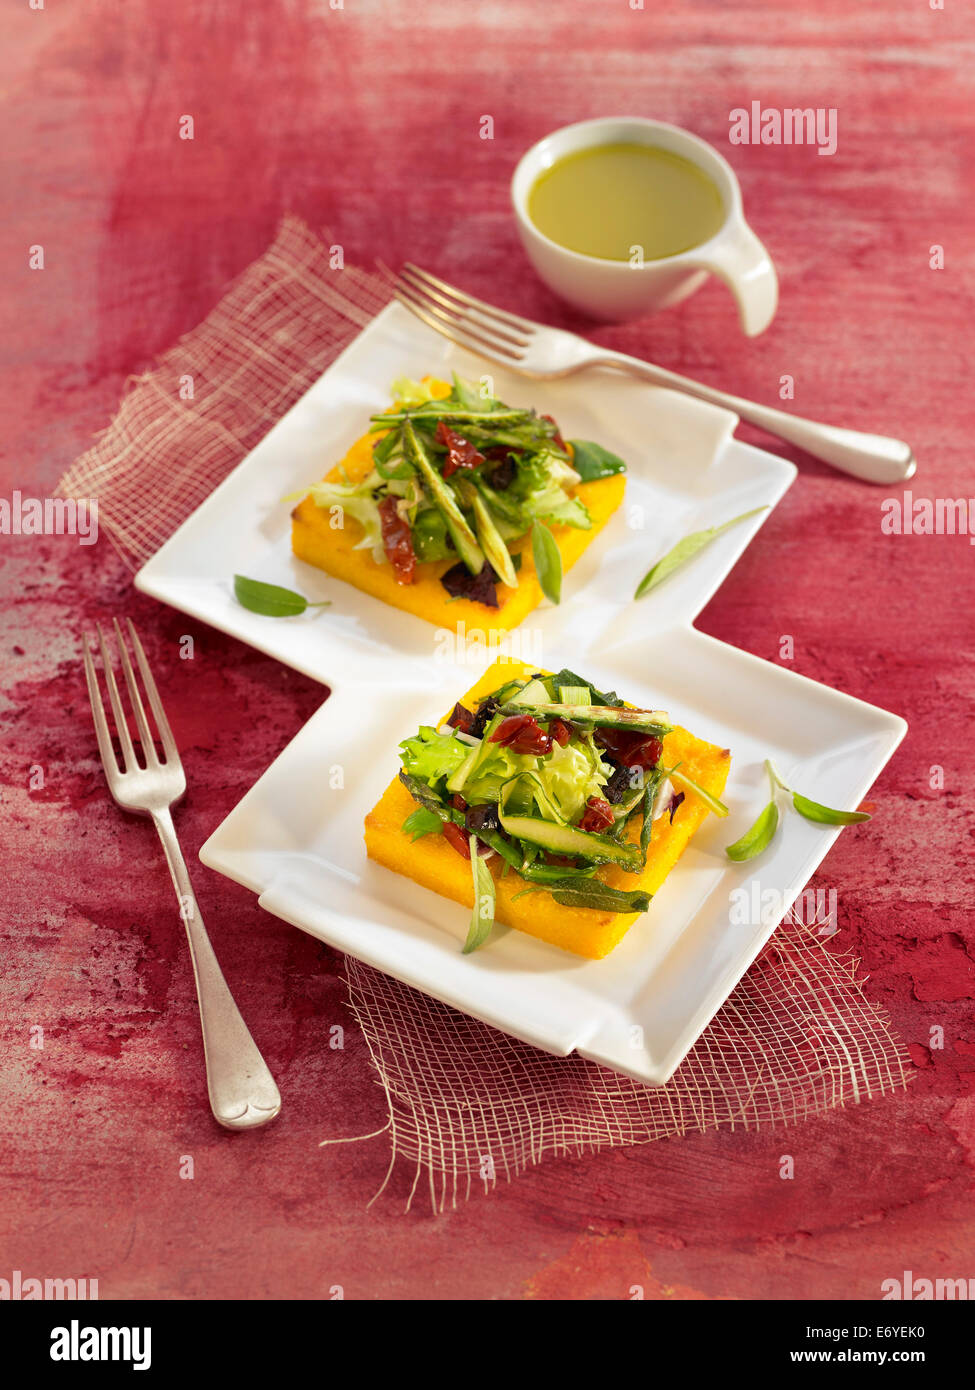 Polenta and salad Stock Photo